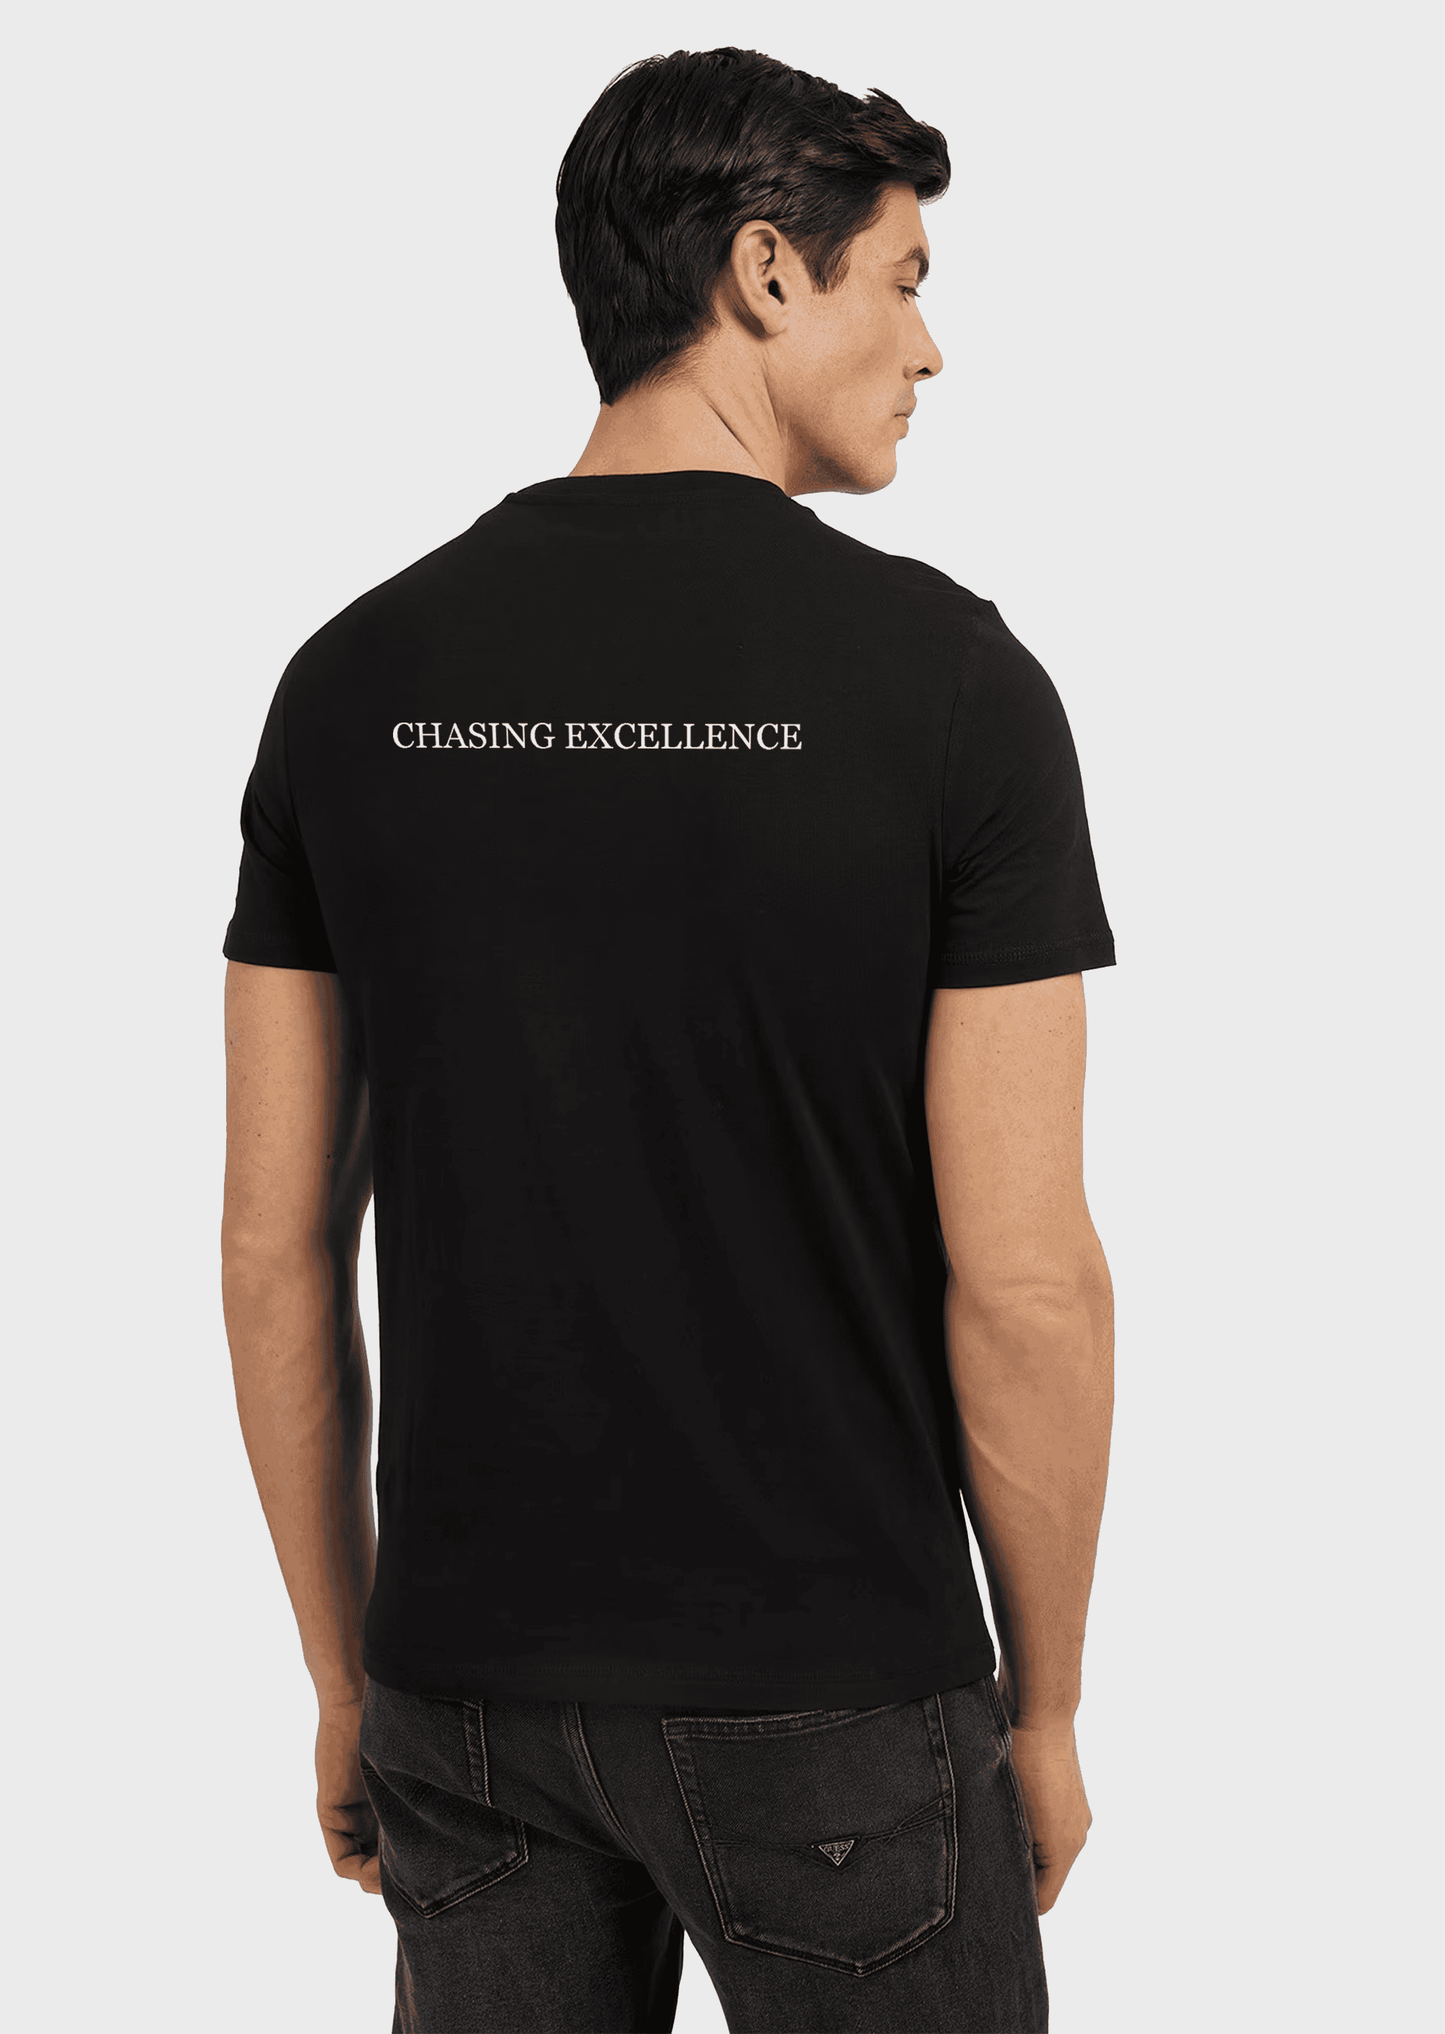 The Virtus T-Shirt Store – Apparel Virtus